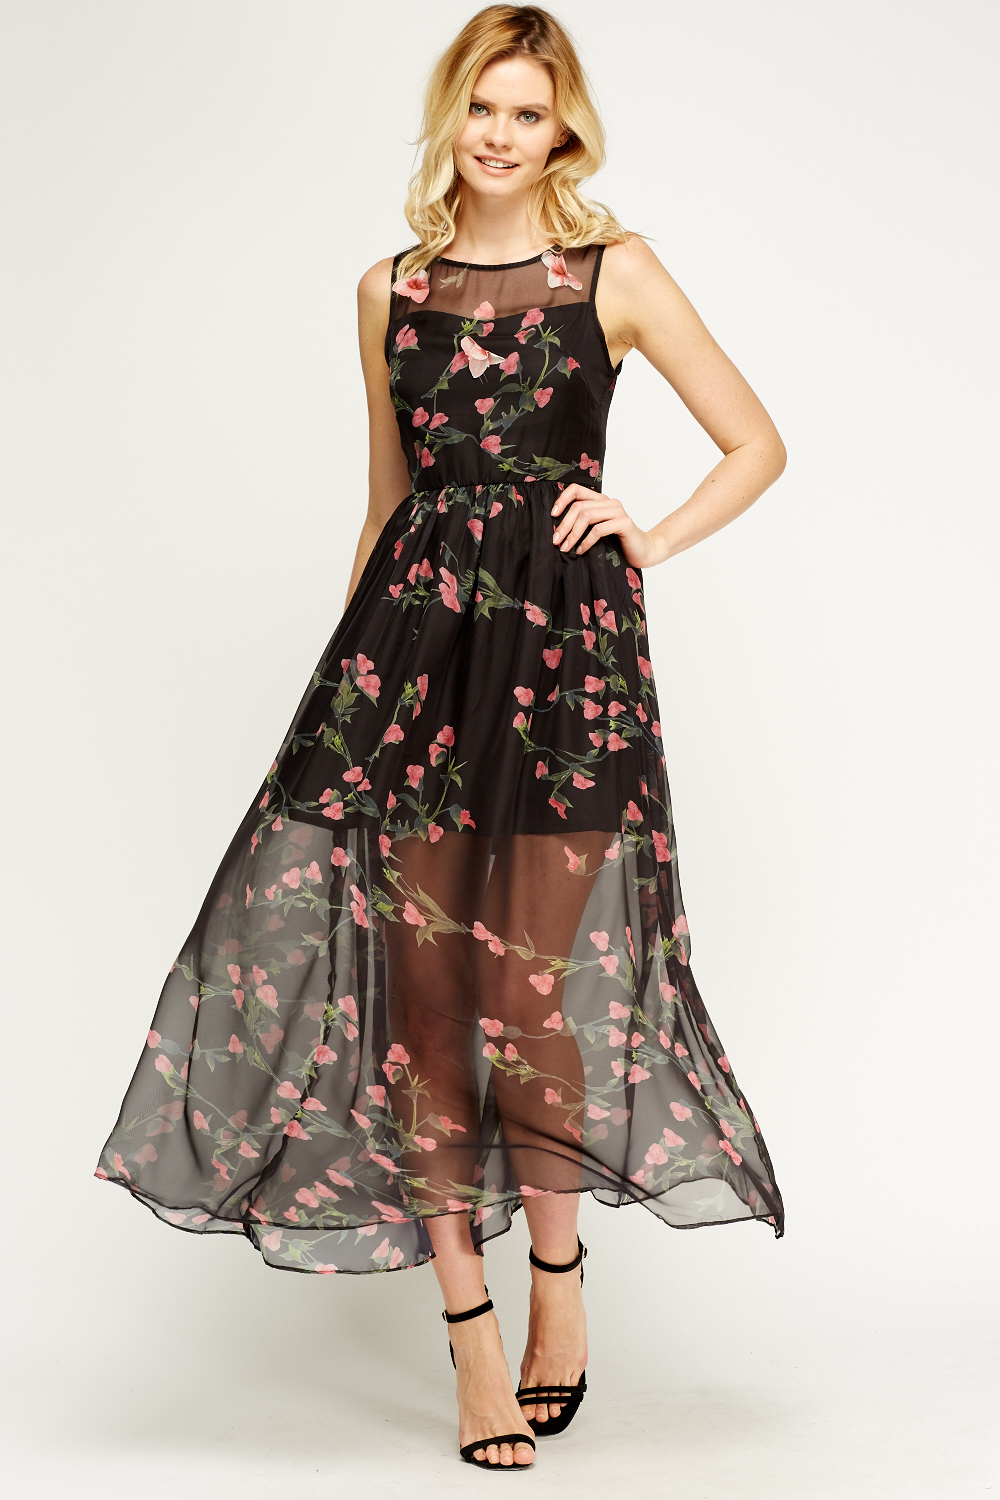 Floral Sheer Maxi Dress - Just $7